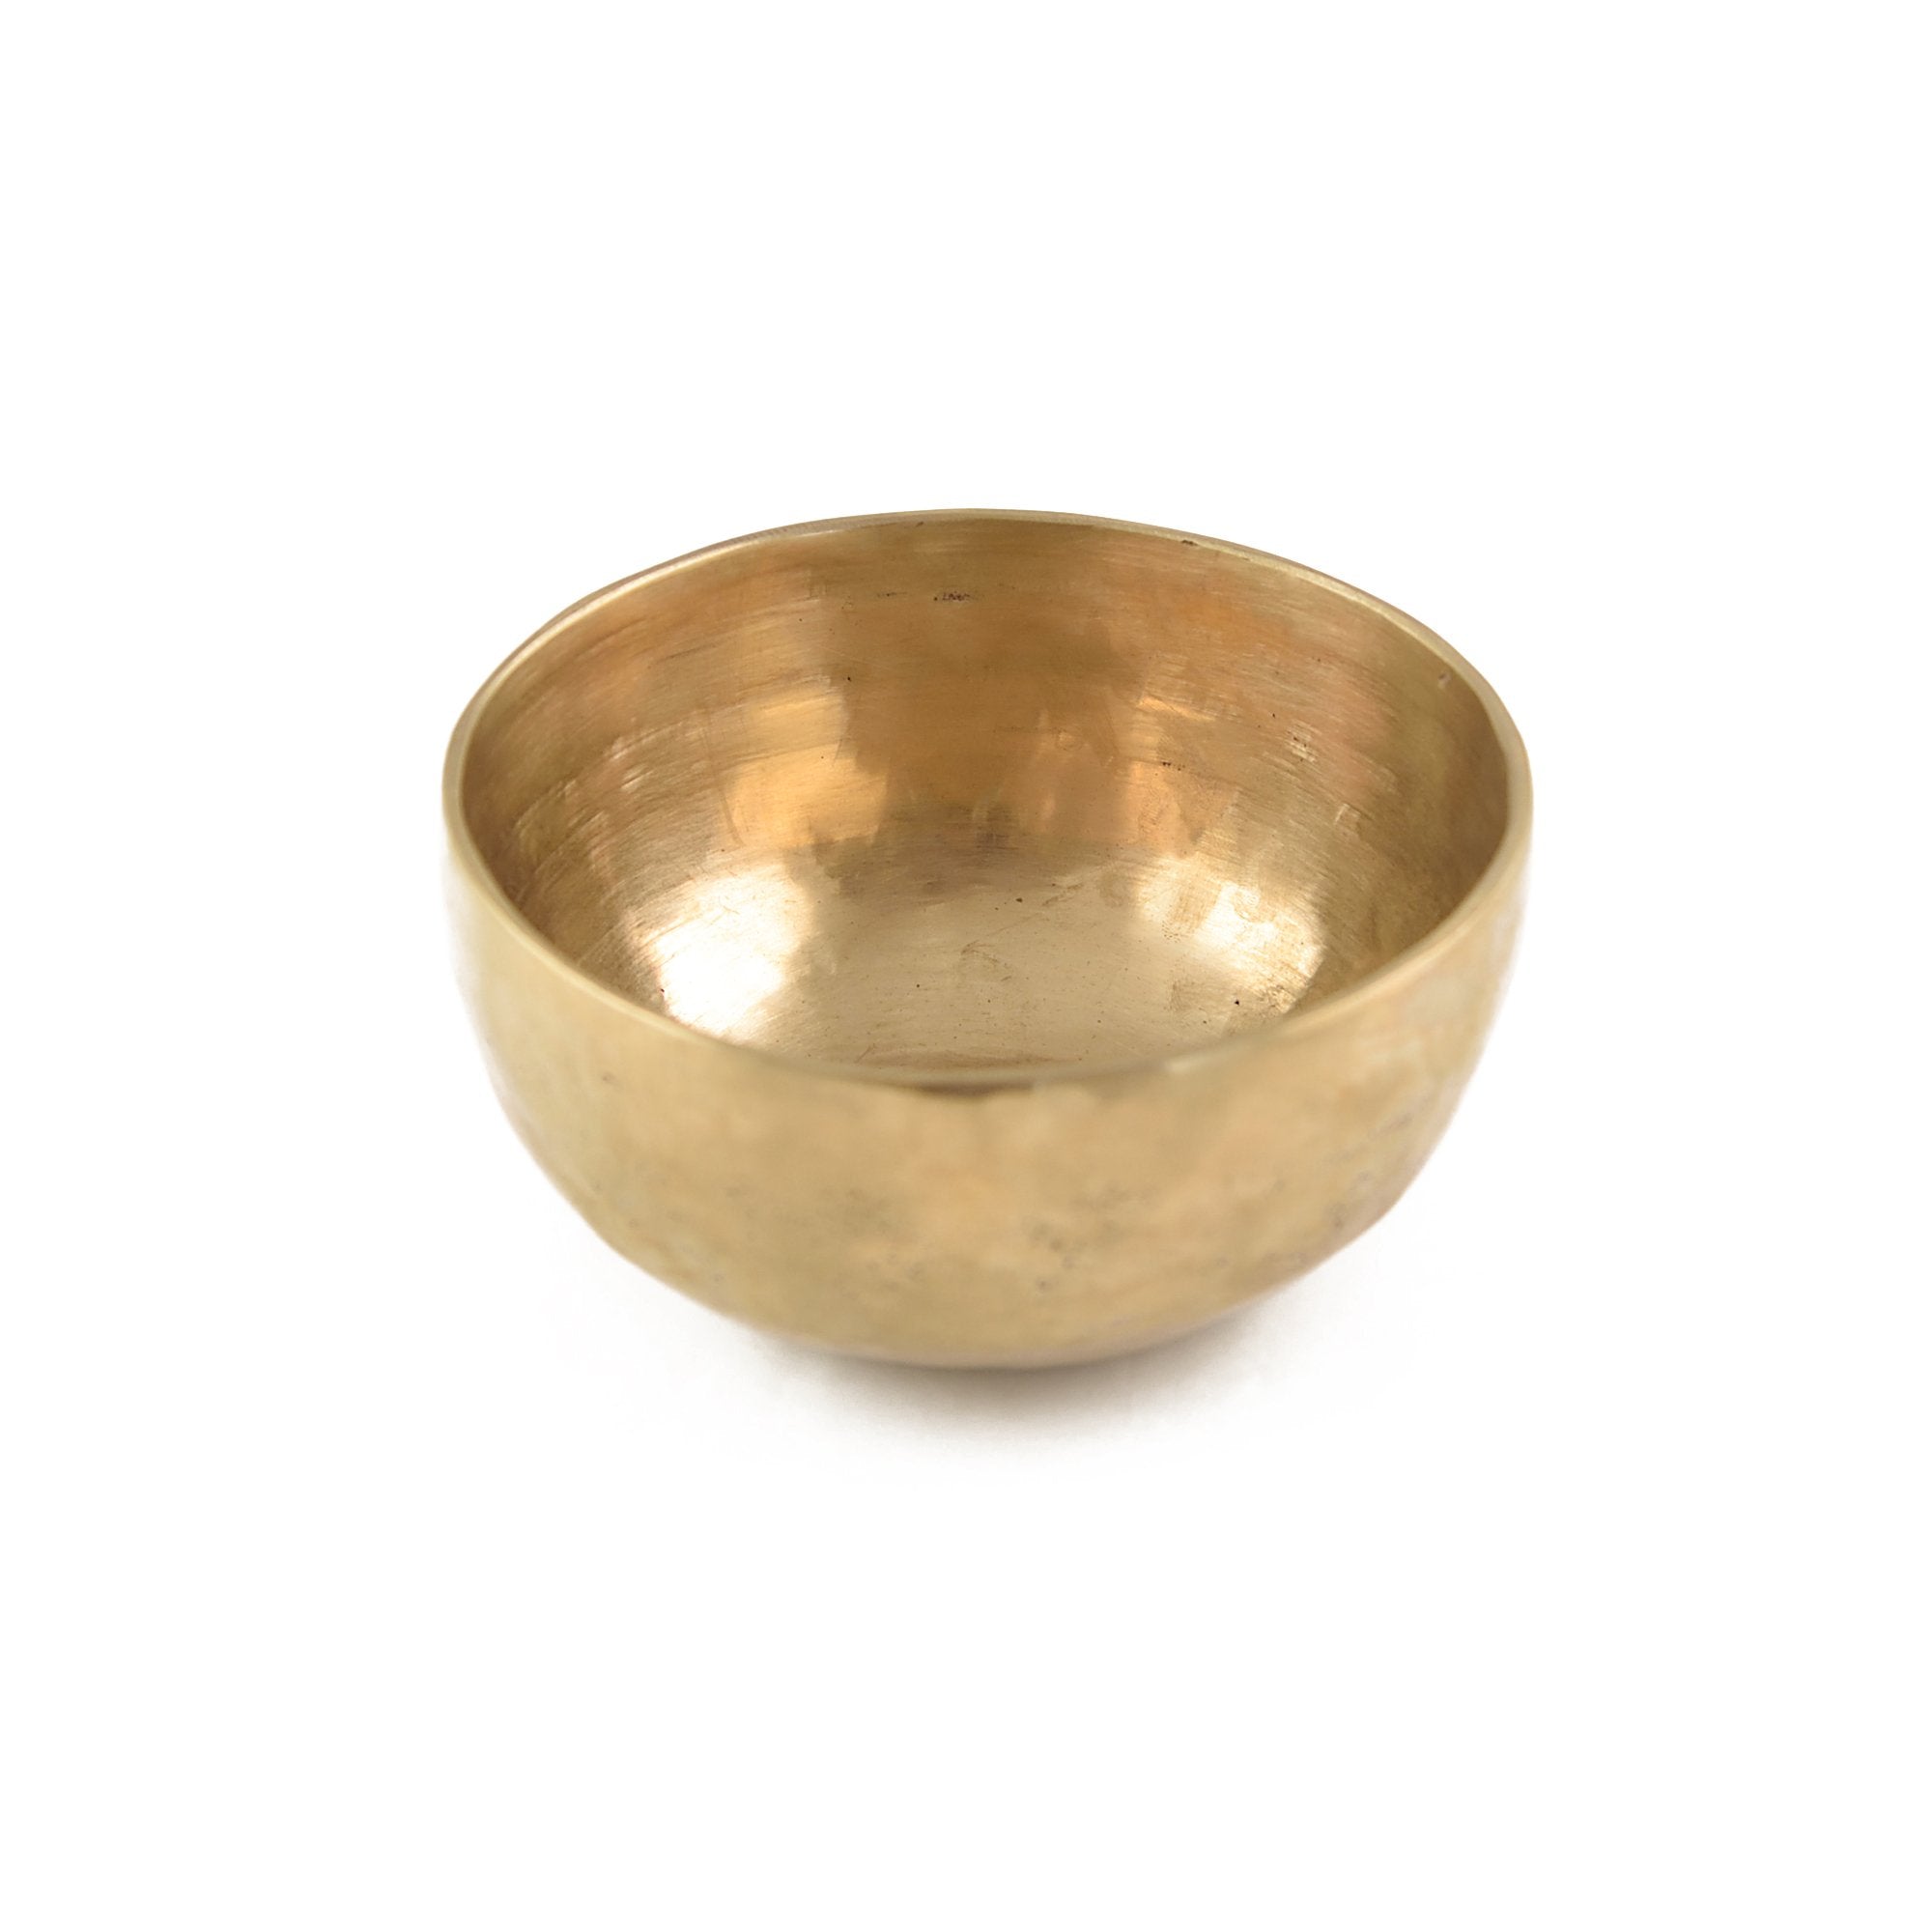 Tibetan Singing Bowl (Small) 400-529 gm